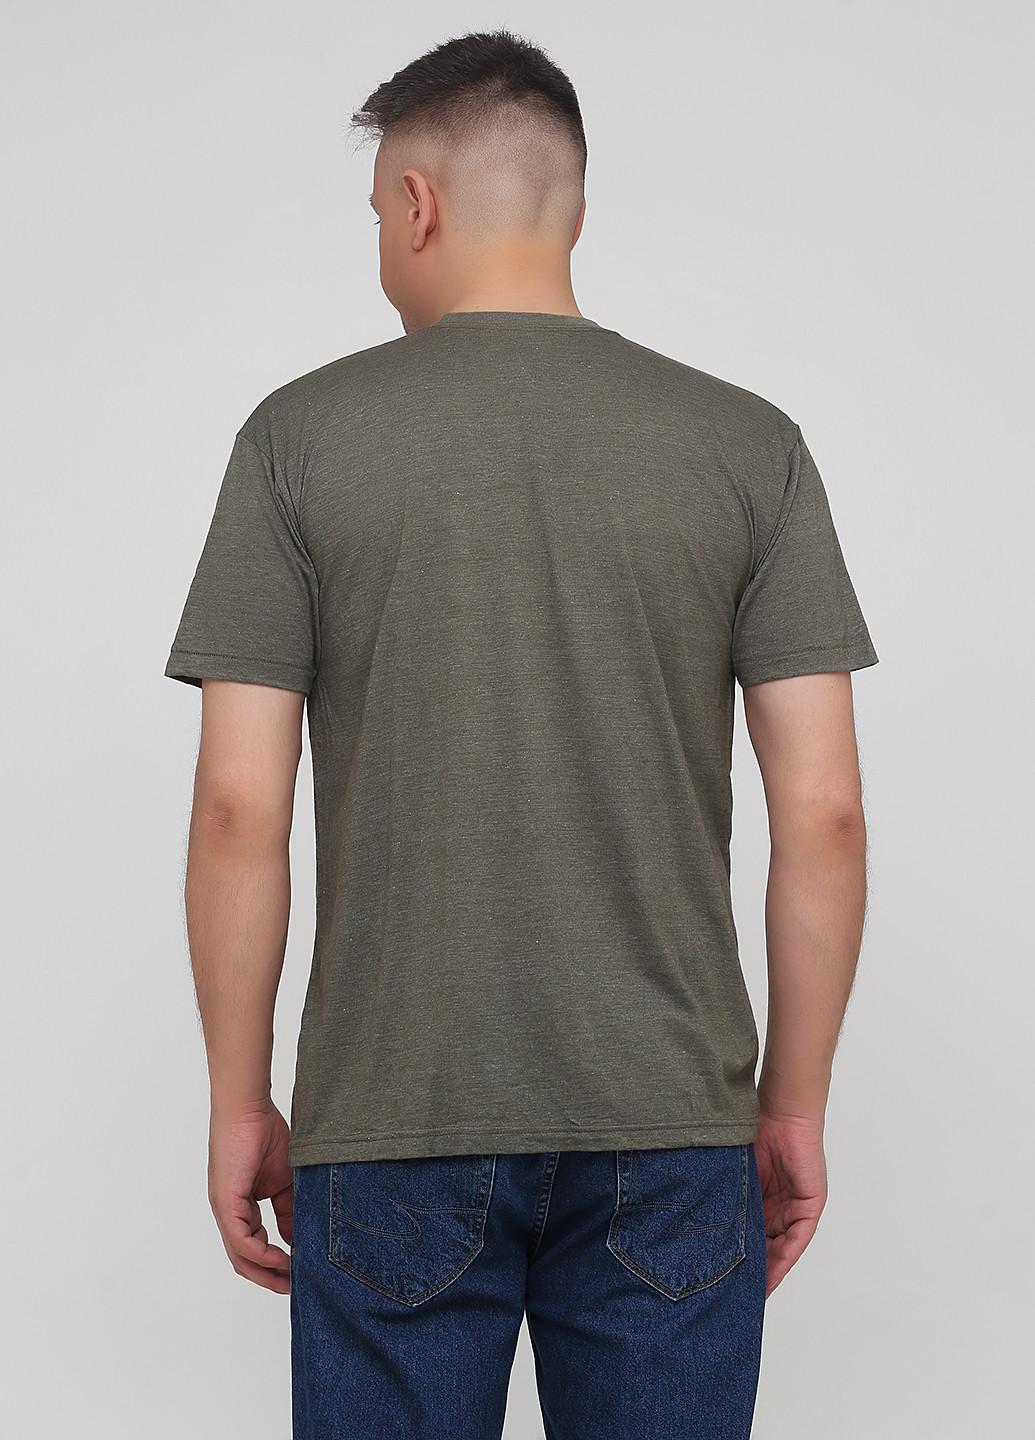 Хаки (оливковая) летняя футболка American Apparel